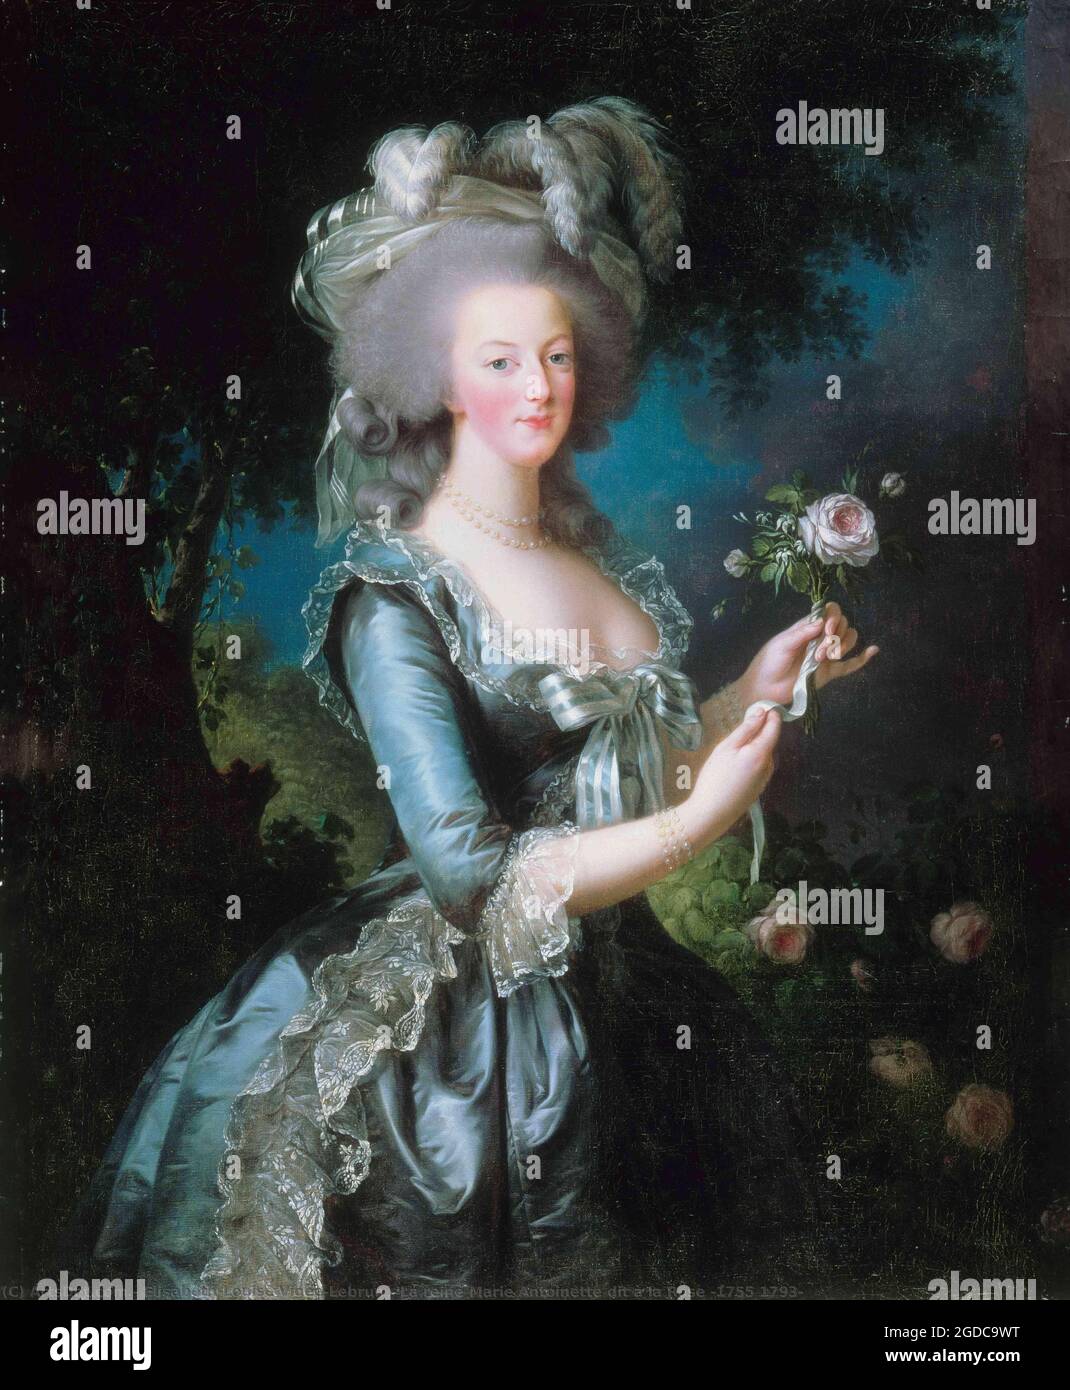 Titel: Marie Antoinette mit einer Rose, 1783 Künstlerin: Elisabeth Louise Vigée-Lebrun Medium: Öl auf Leinwand Maße: 113 x 87 cm Stockfoto